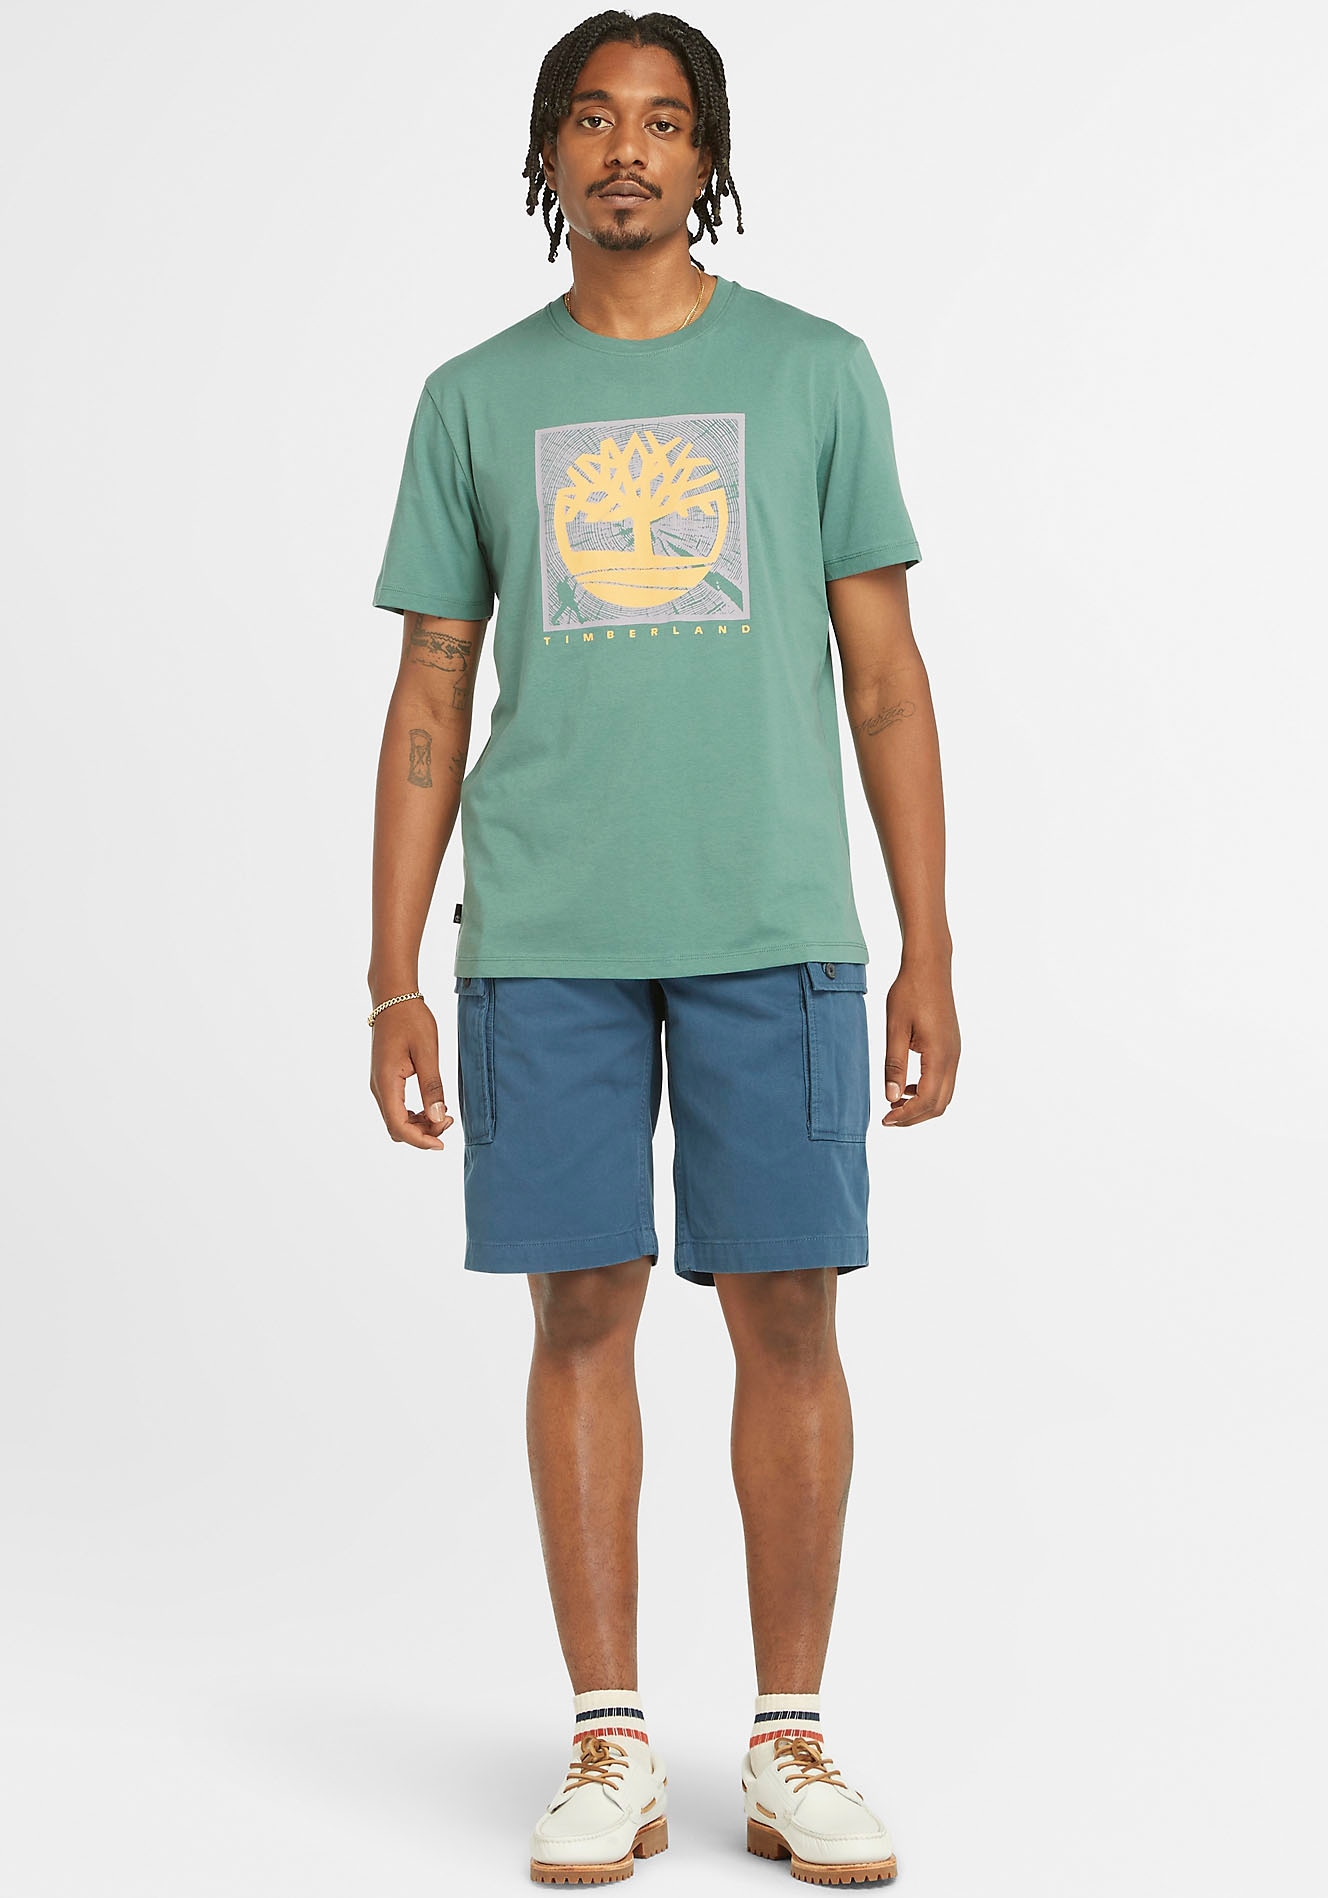 Timberland T-Shirt »Short Sleeve Front Graphic Tee«, in grossen Grössen